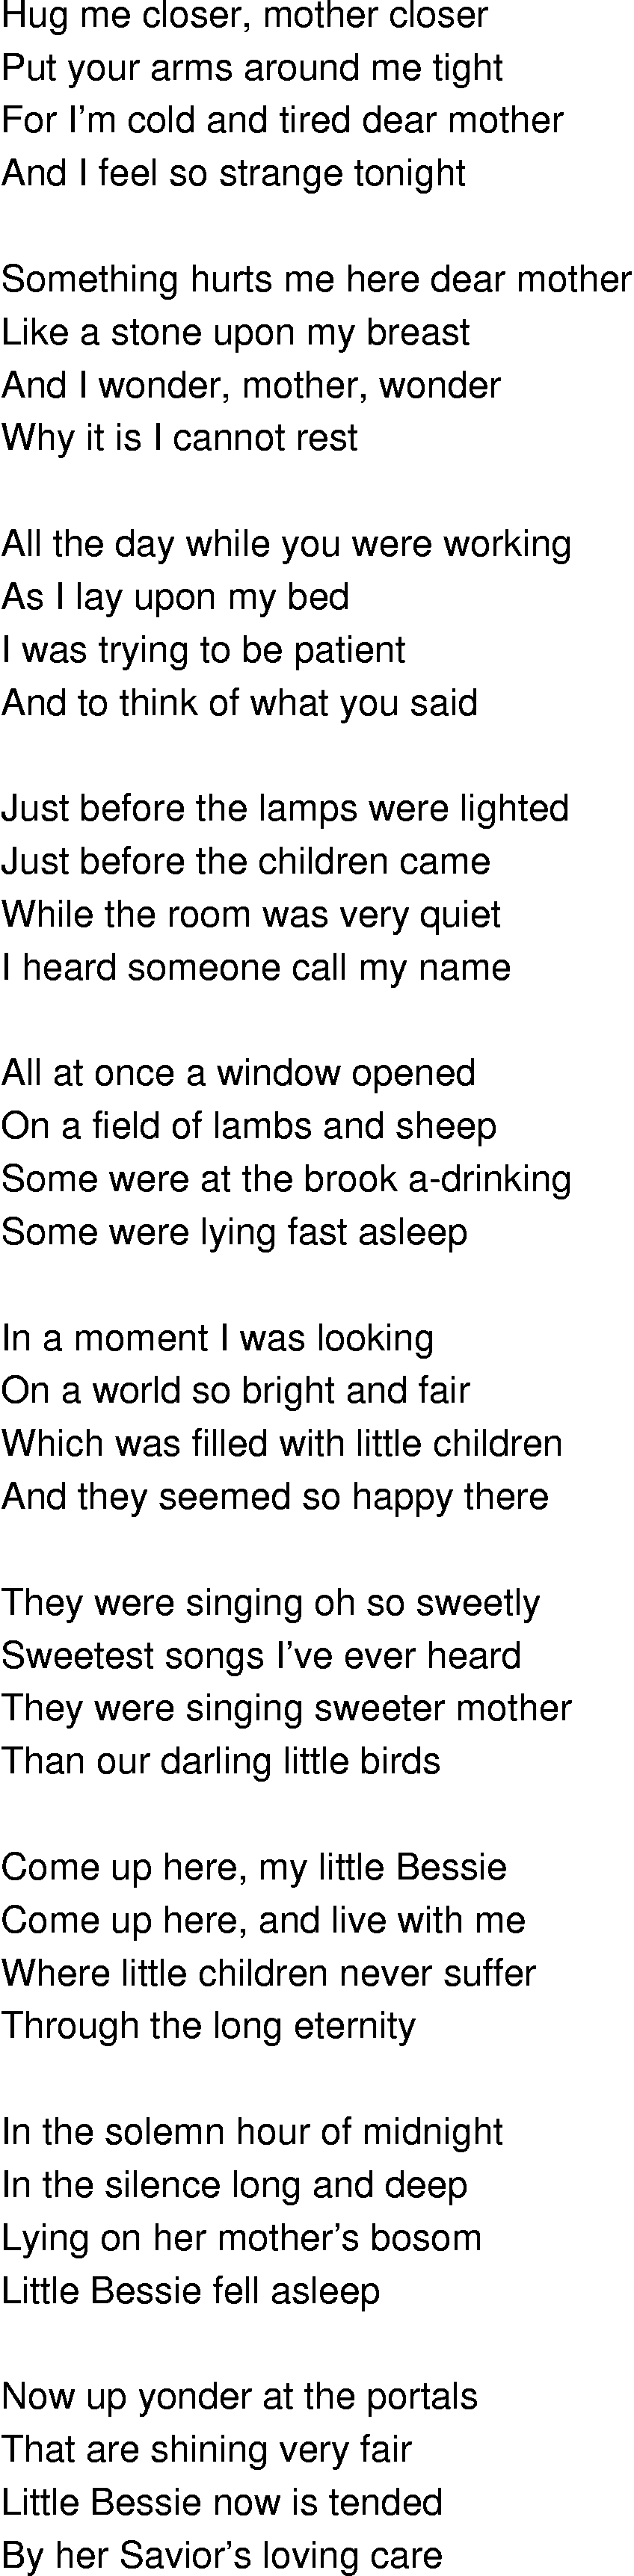 Old-Time (oldtimey) Song Lyrics - little bessie